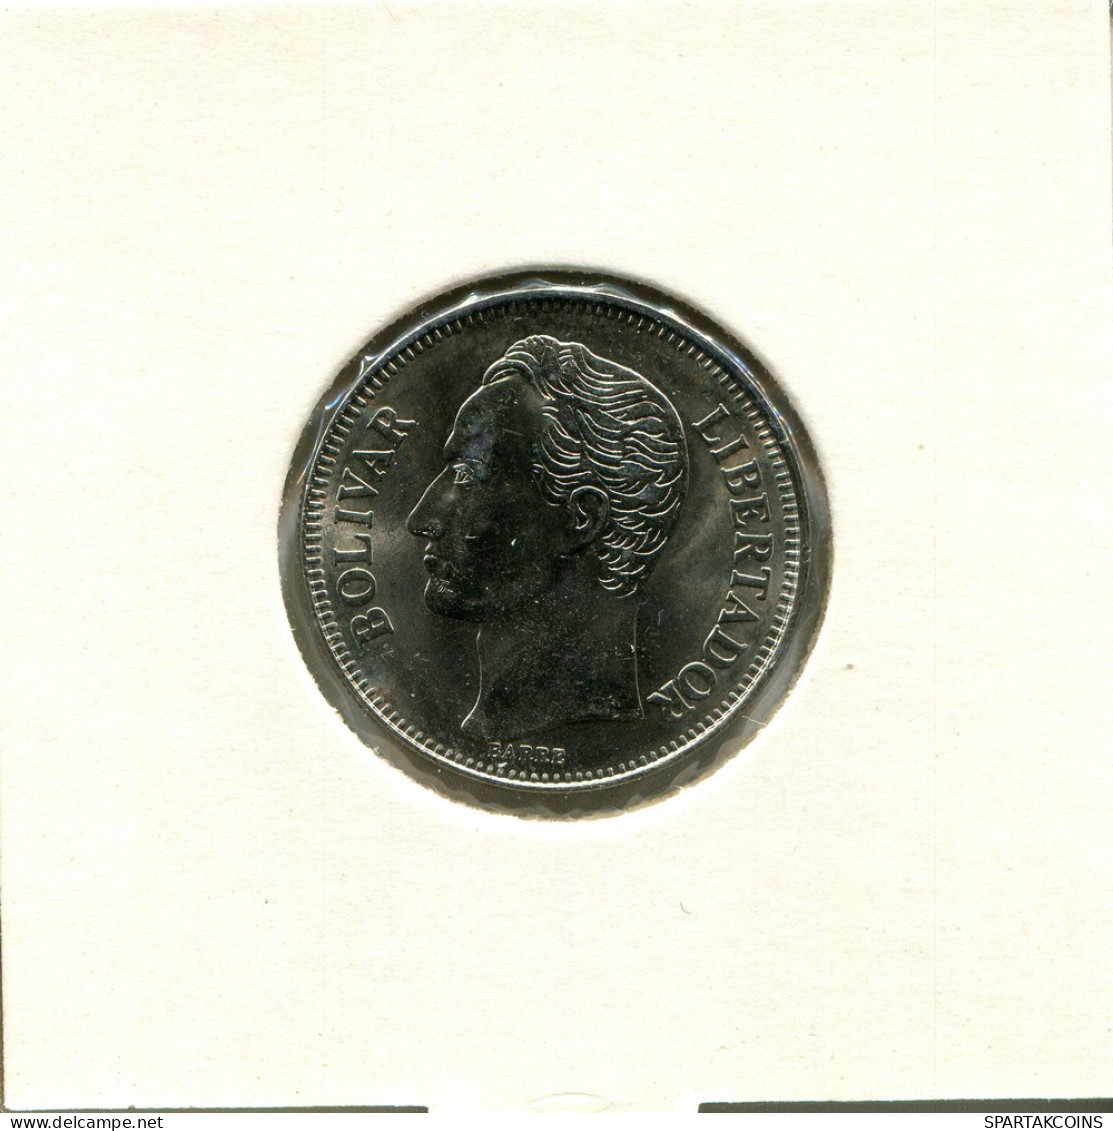 1 BOLIVAR 1990 VENEZUELA Coin #AT029.U.A - Venezuela